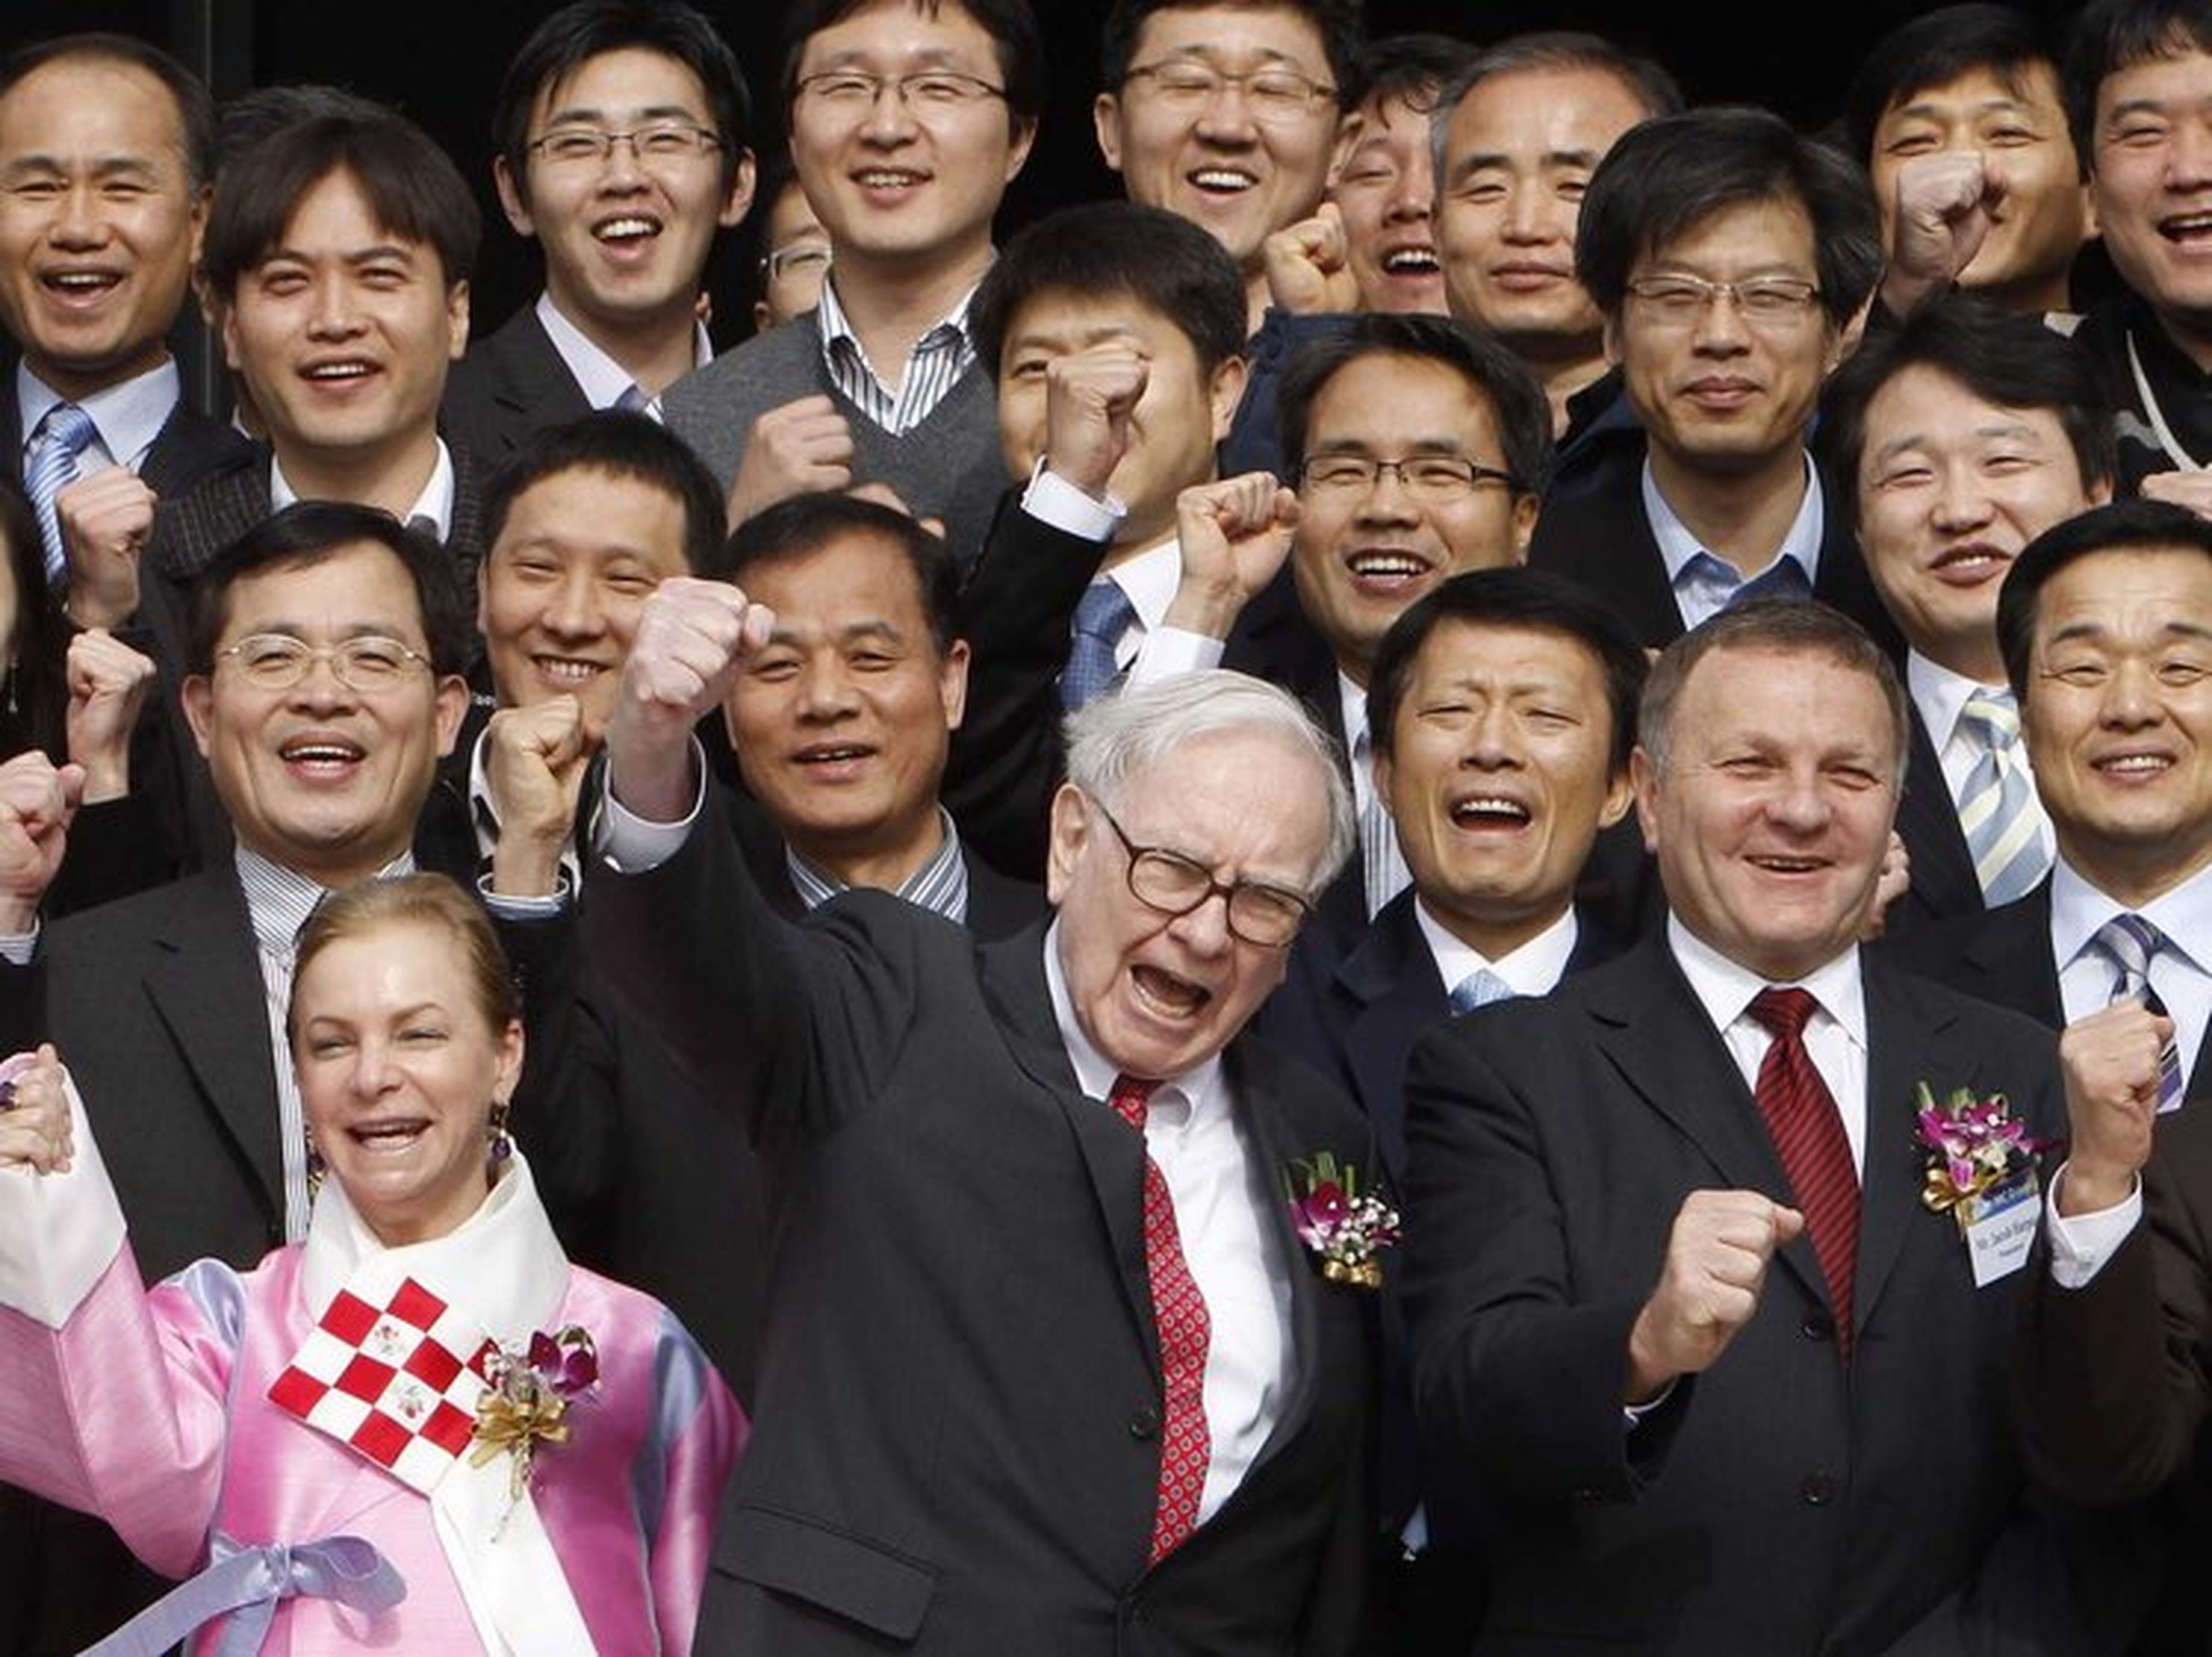 Warren Buffet celebrando algo junto a un gran grupo de personas